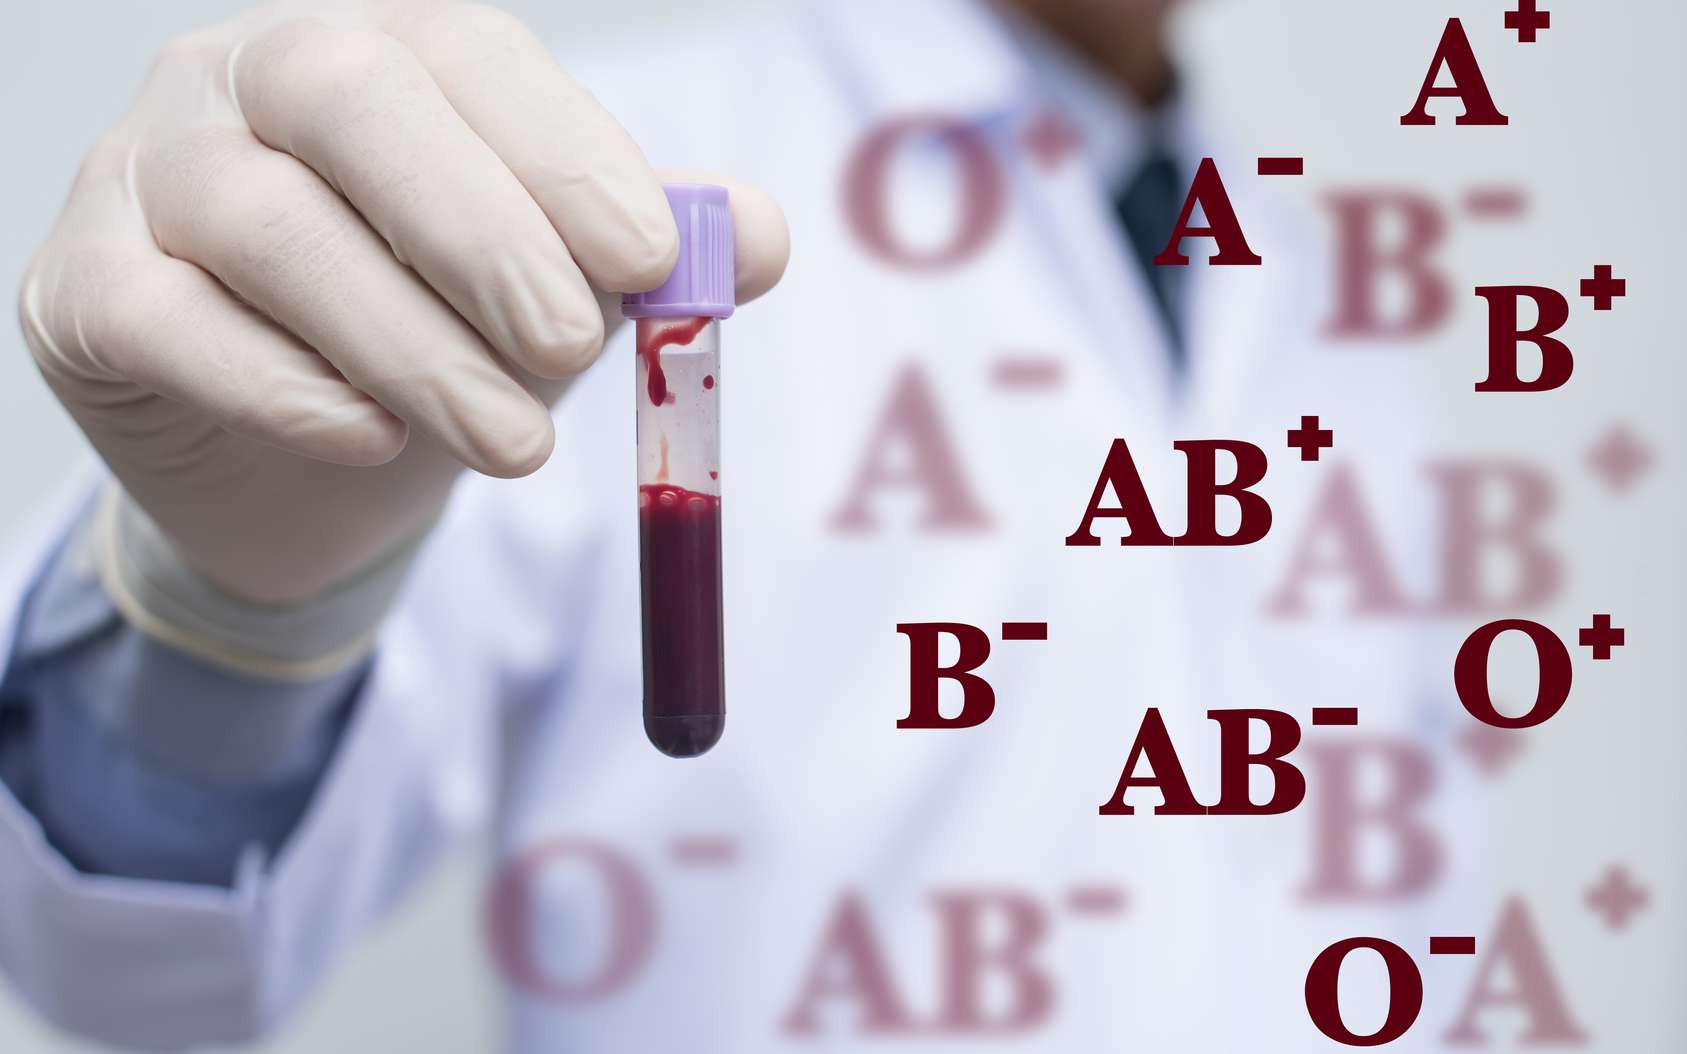 Transformer du sang A ou B en sang O universel grâce à une bactérie. © tippapatt, Fotolia